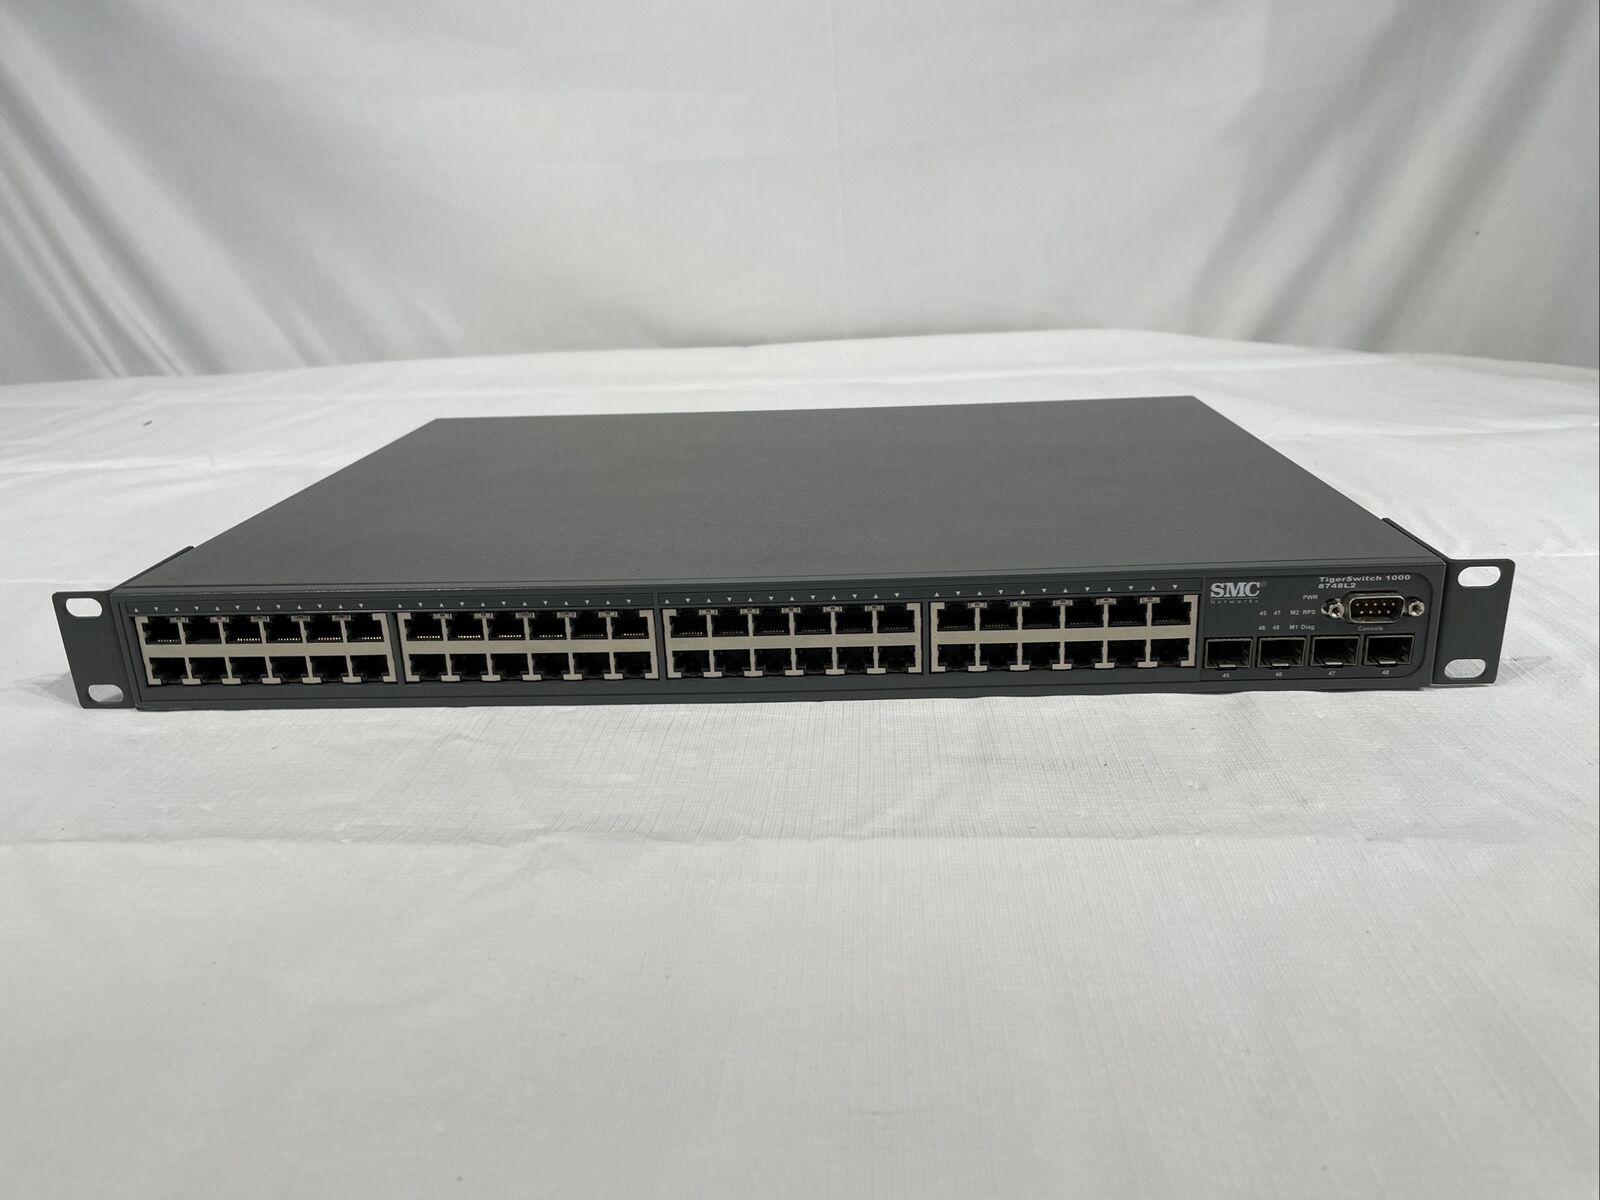 SMC Networks TigerSwitch 10/100/1000 SMC8748L2 48-Port Gigabit Ethernet Switch